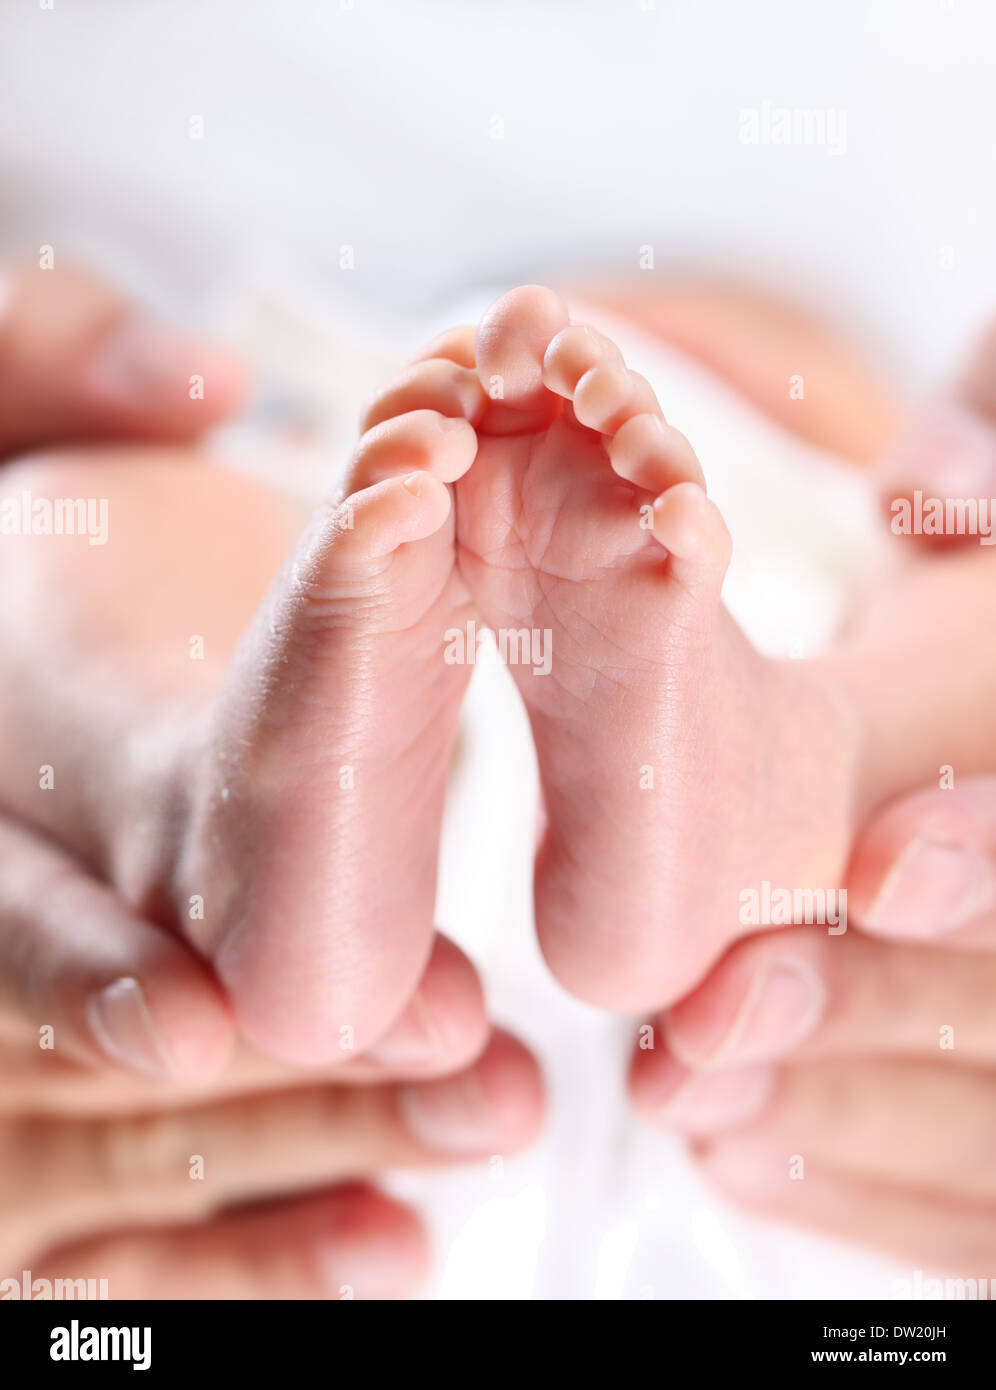 A parent's hands tenderly hold their newborn feet Stock Photo